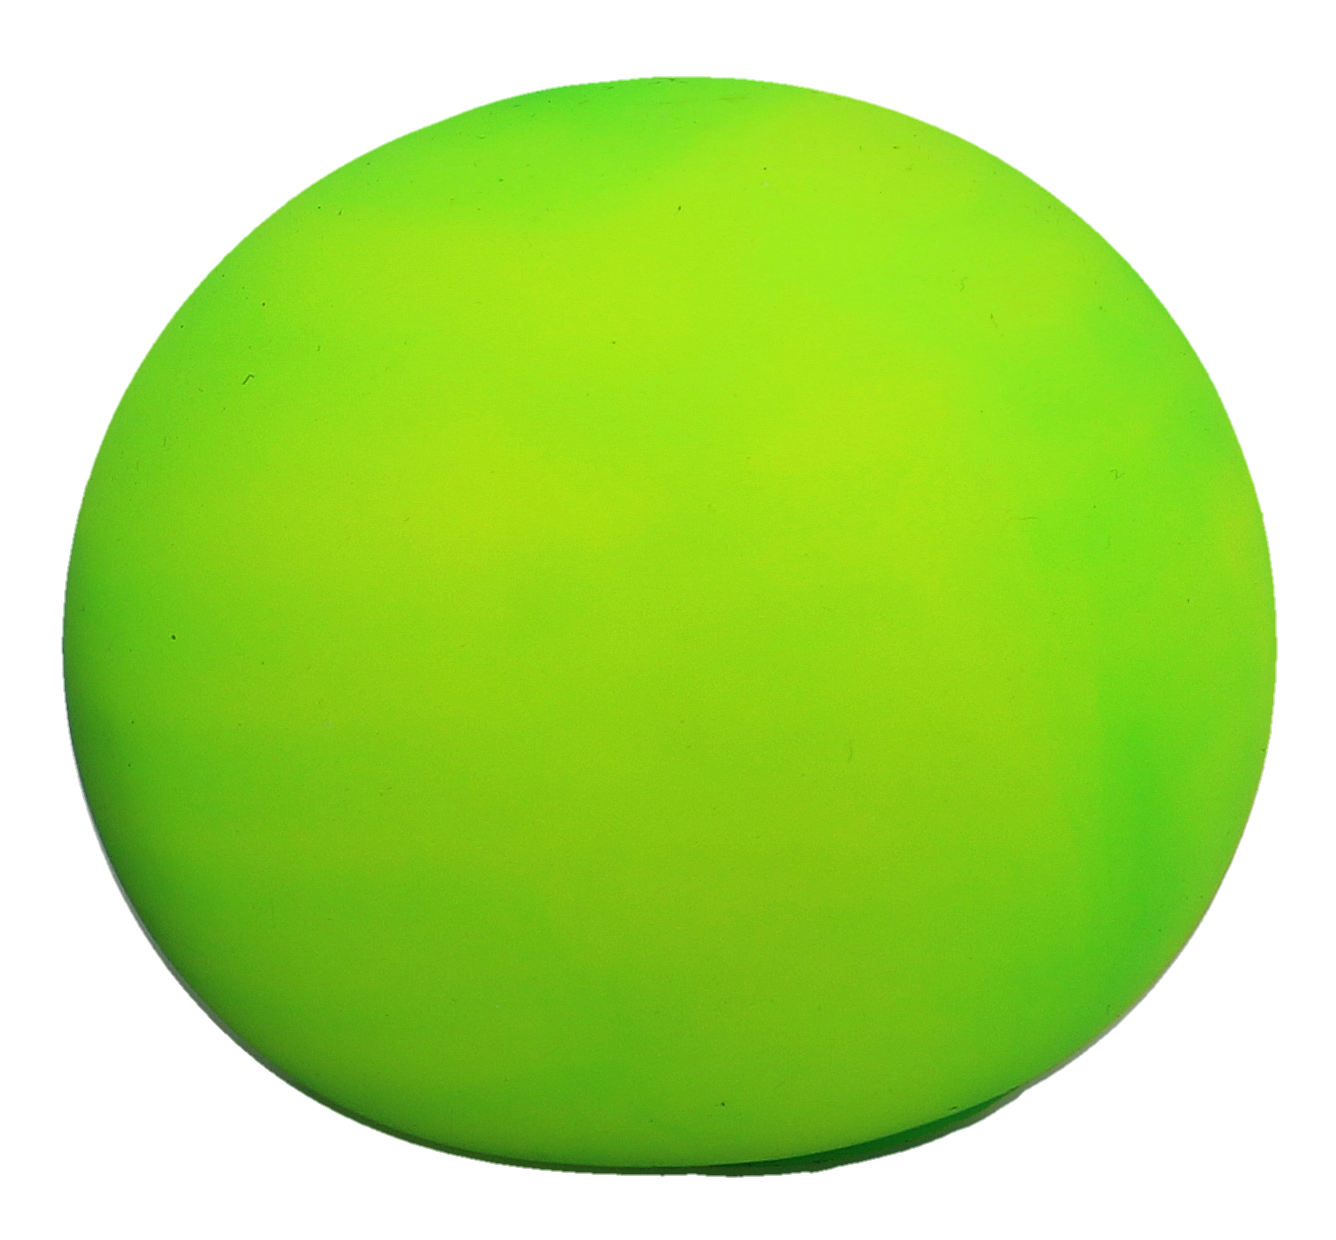 Keycraft Squishy Planet Stress Ball 6cm